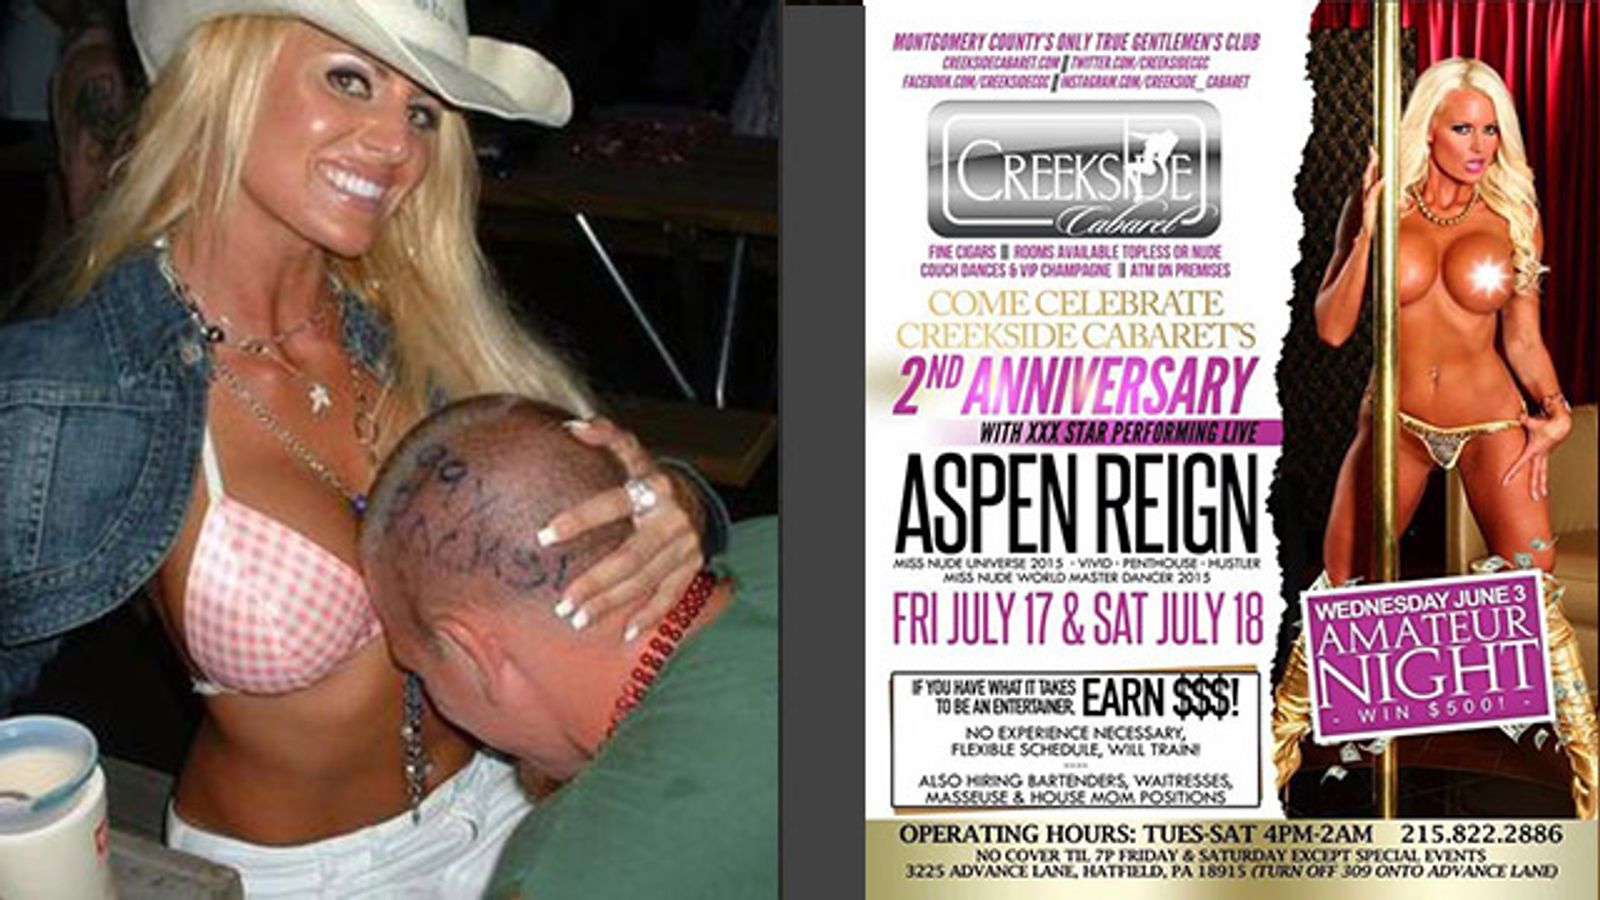 Aspen Reign to Headline at Creekside Cabaret in Hatfield, PA